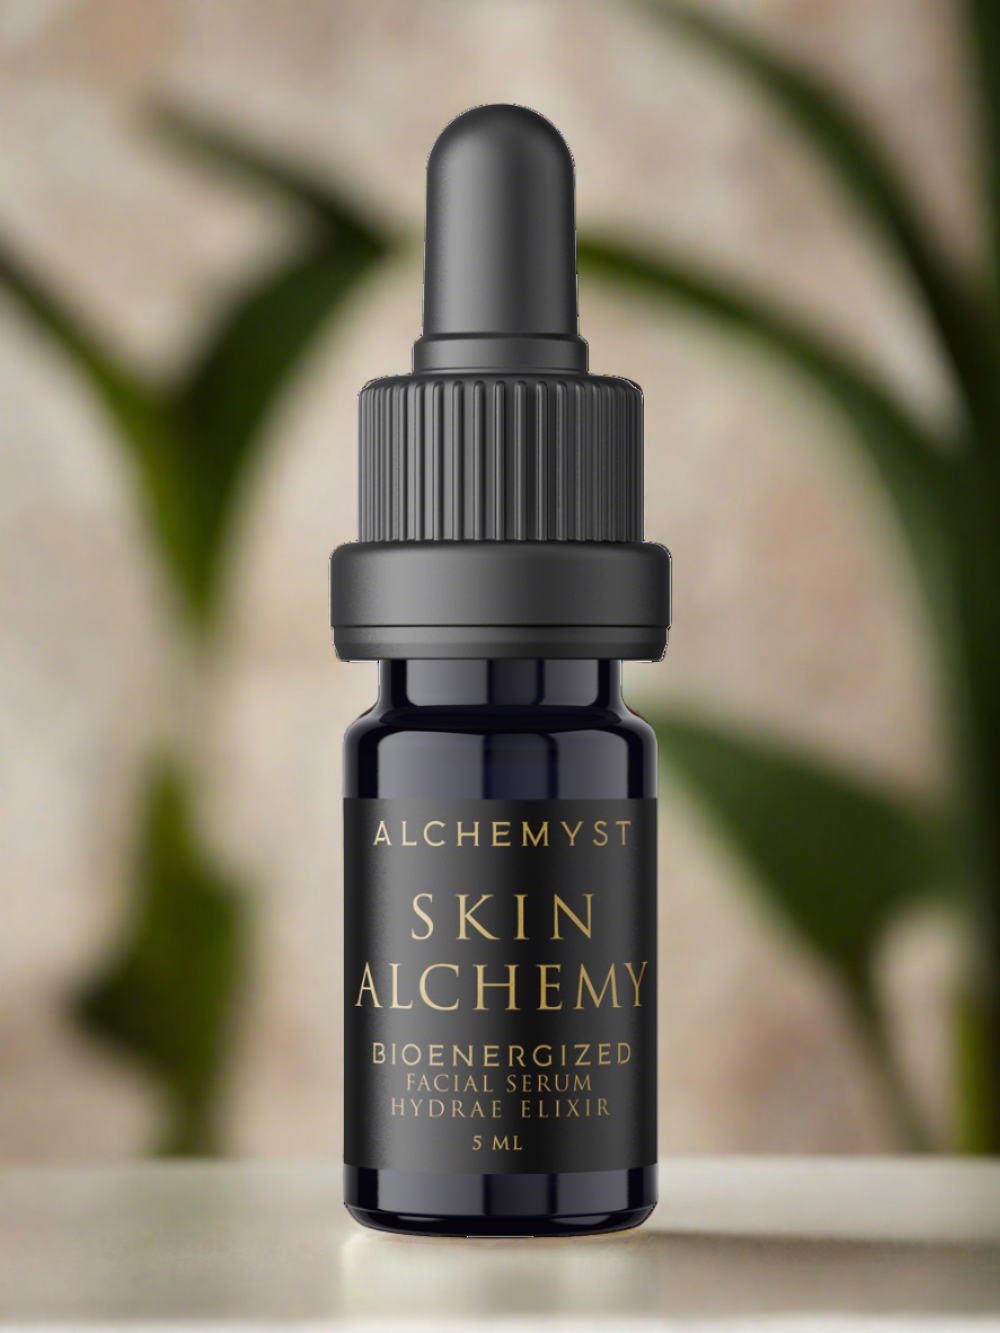 SKIN ALCHEMY - Hydrating Elixir - Bioenergized Certified Organic Skin Serum Alchemyst Co